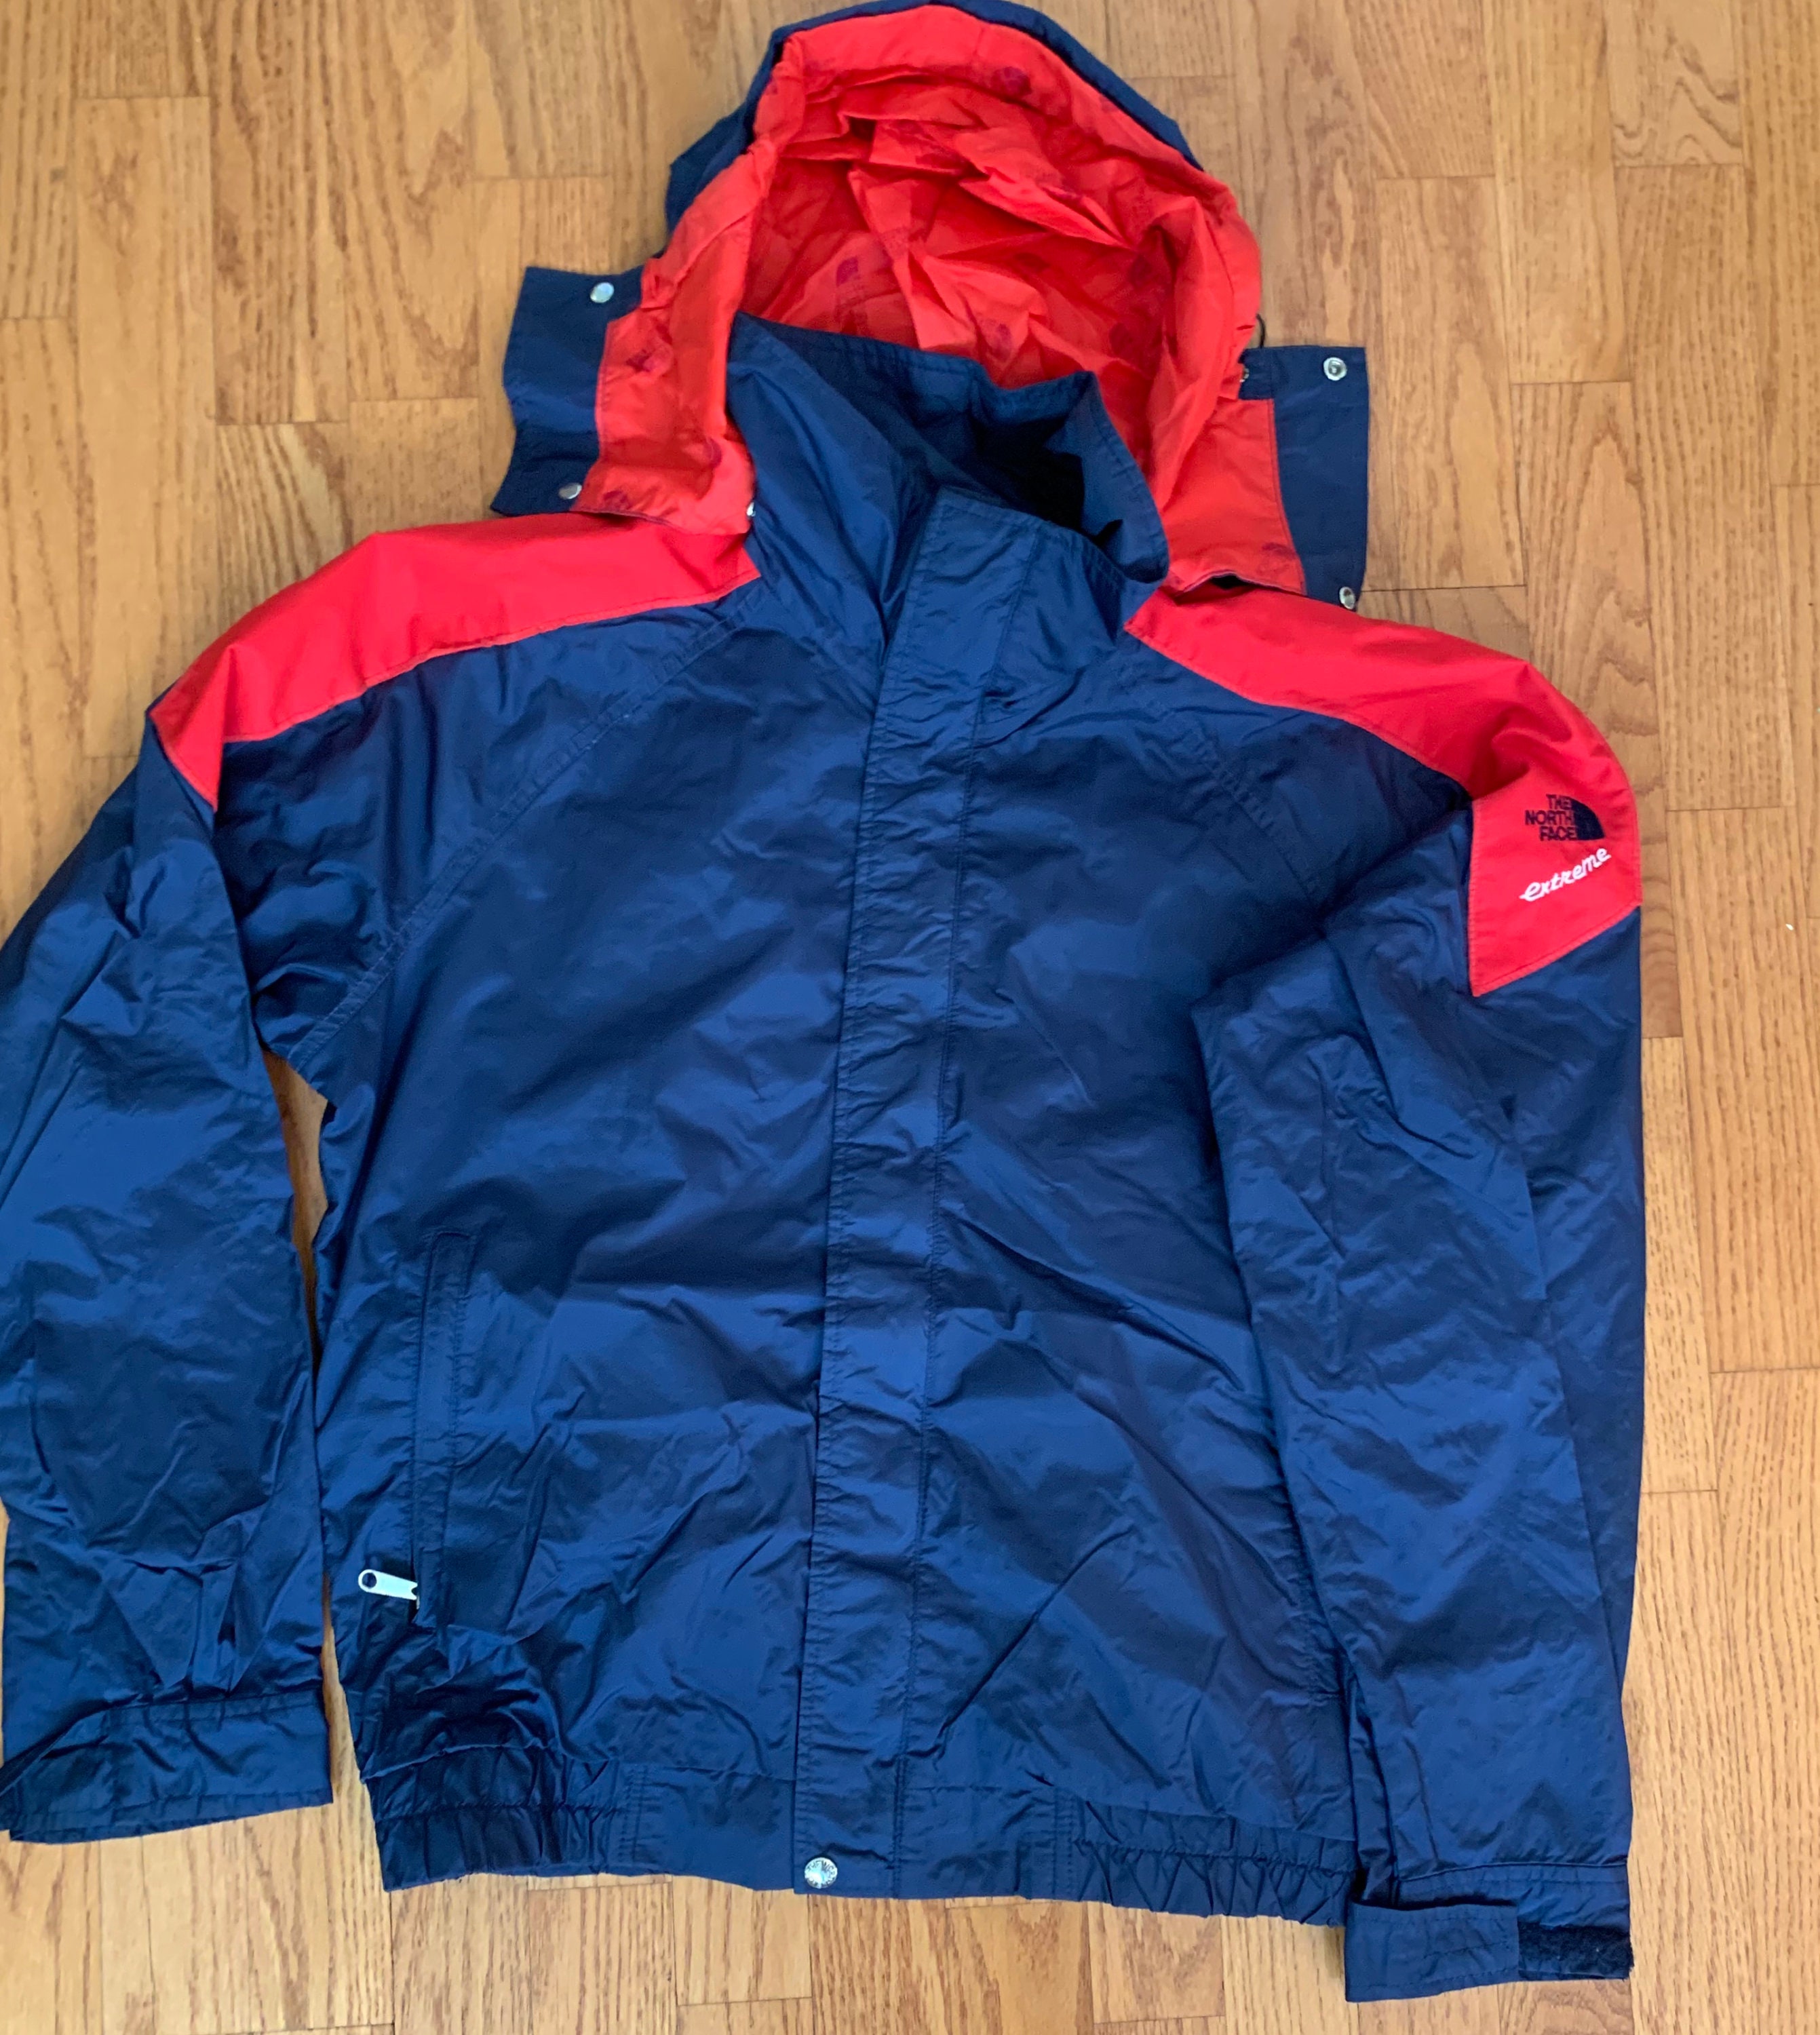 Vintage North Face Extreme Raincoat | Etsy